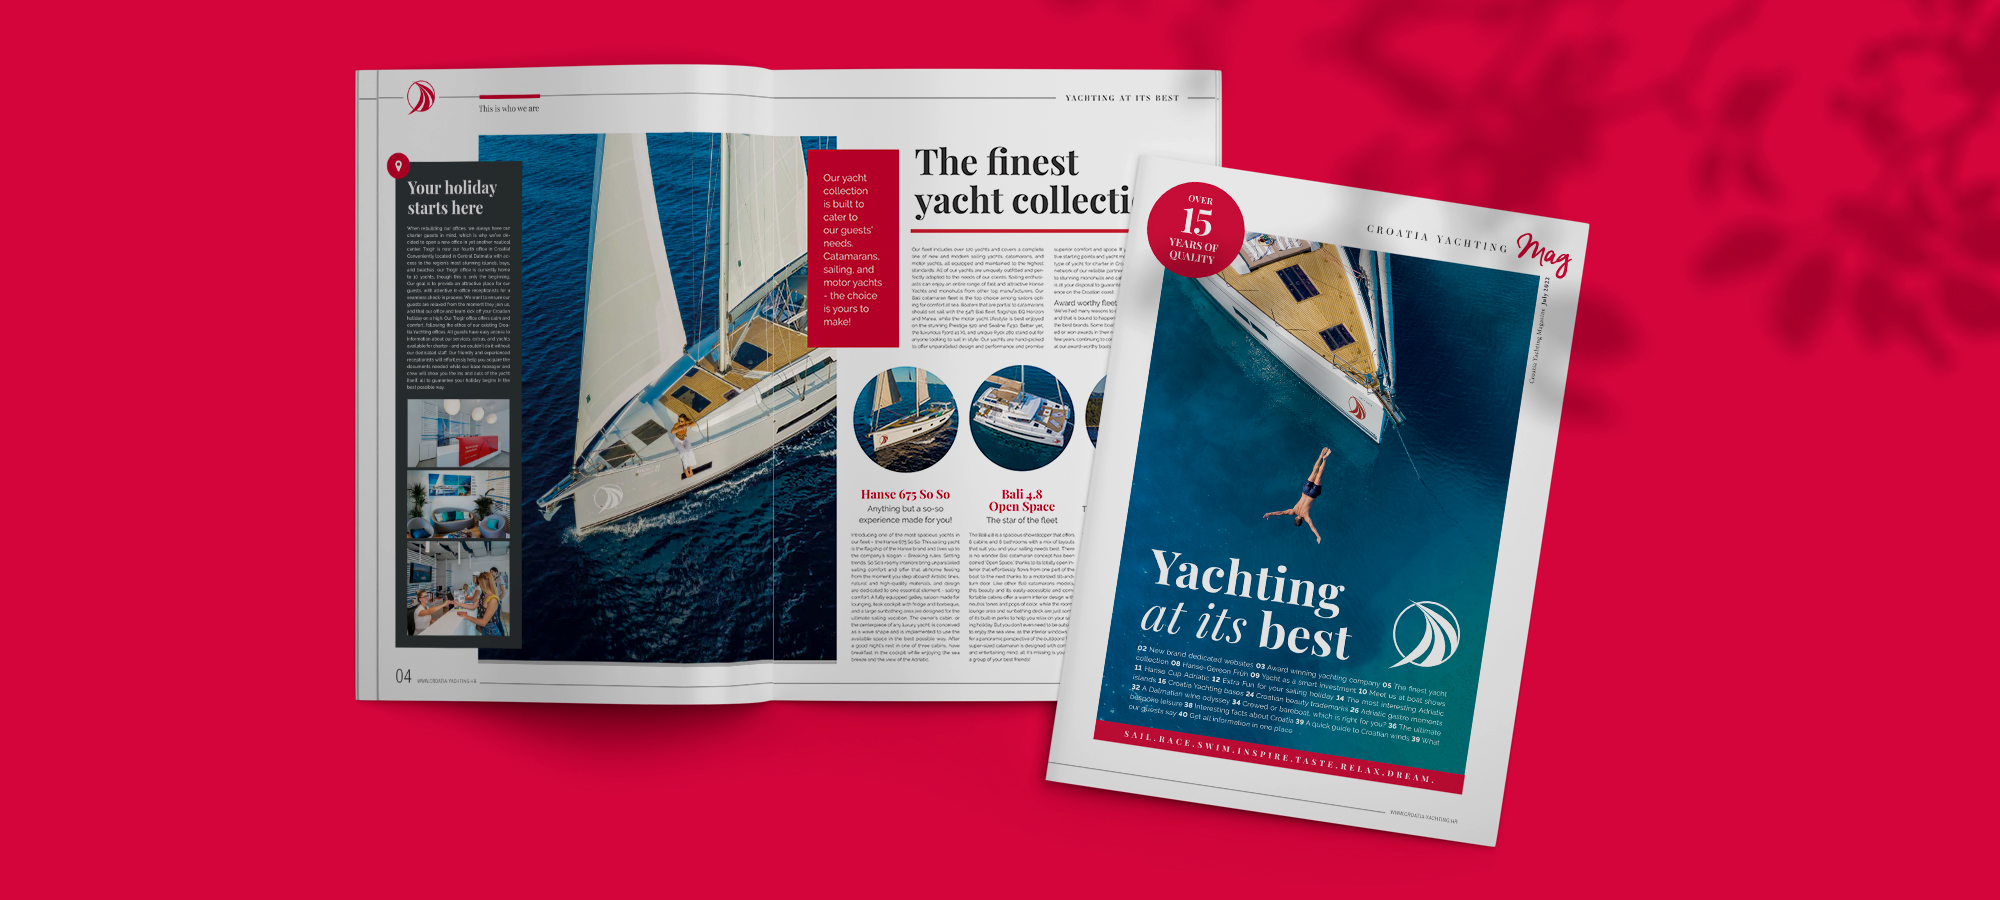 The new Croatia Yachting Magazine is here!